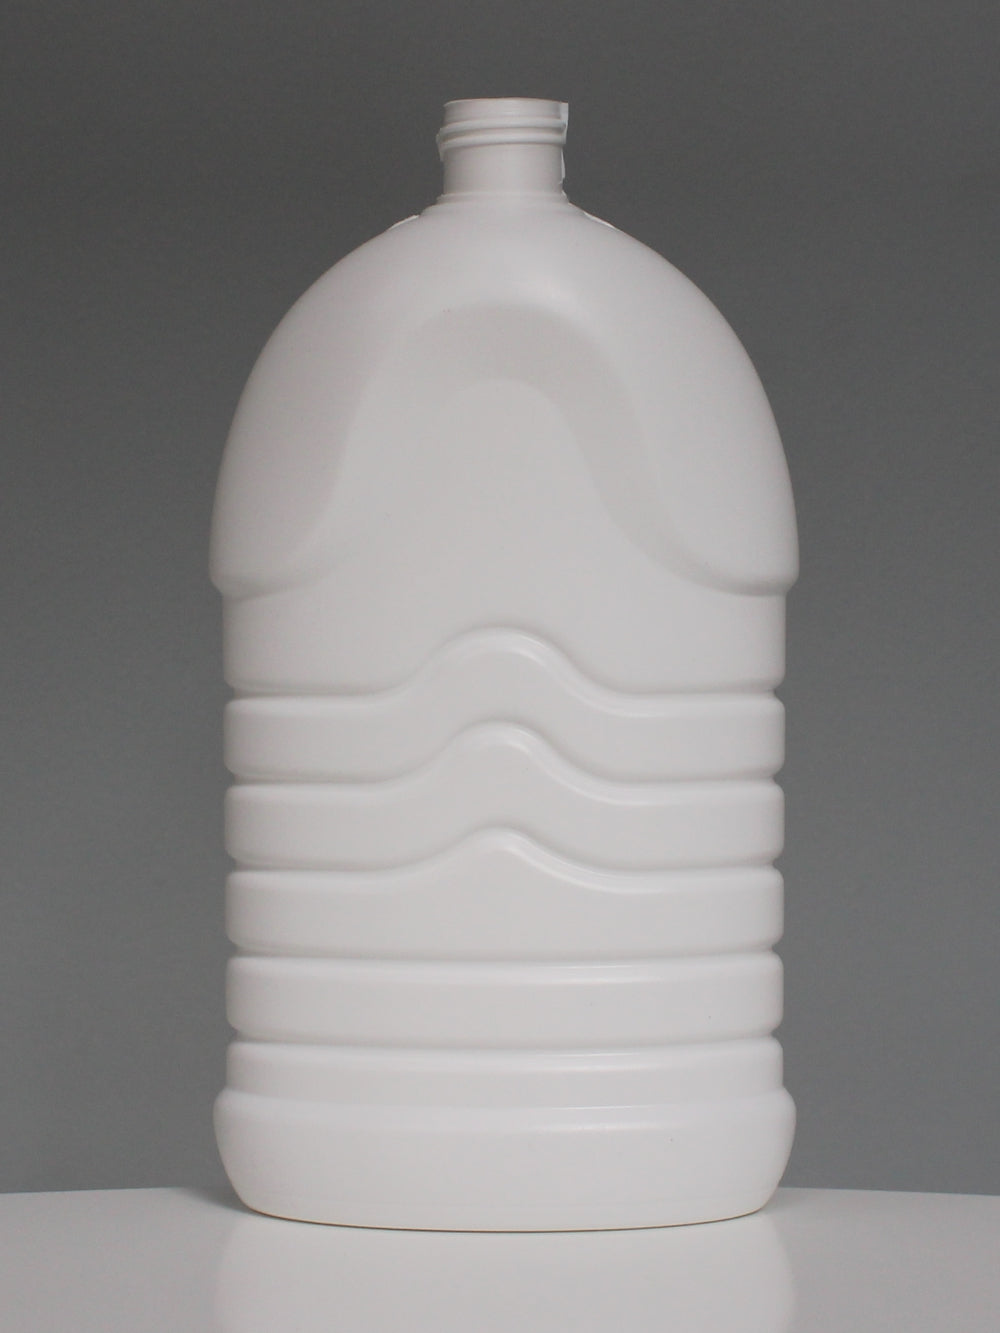 1Lt Kathy Oval Bottle - (Pack of 50 units)